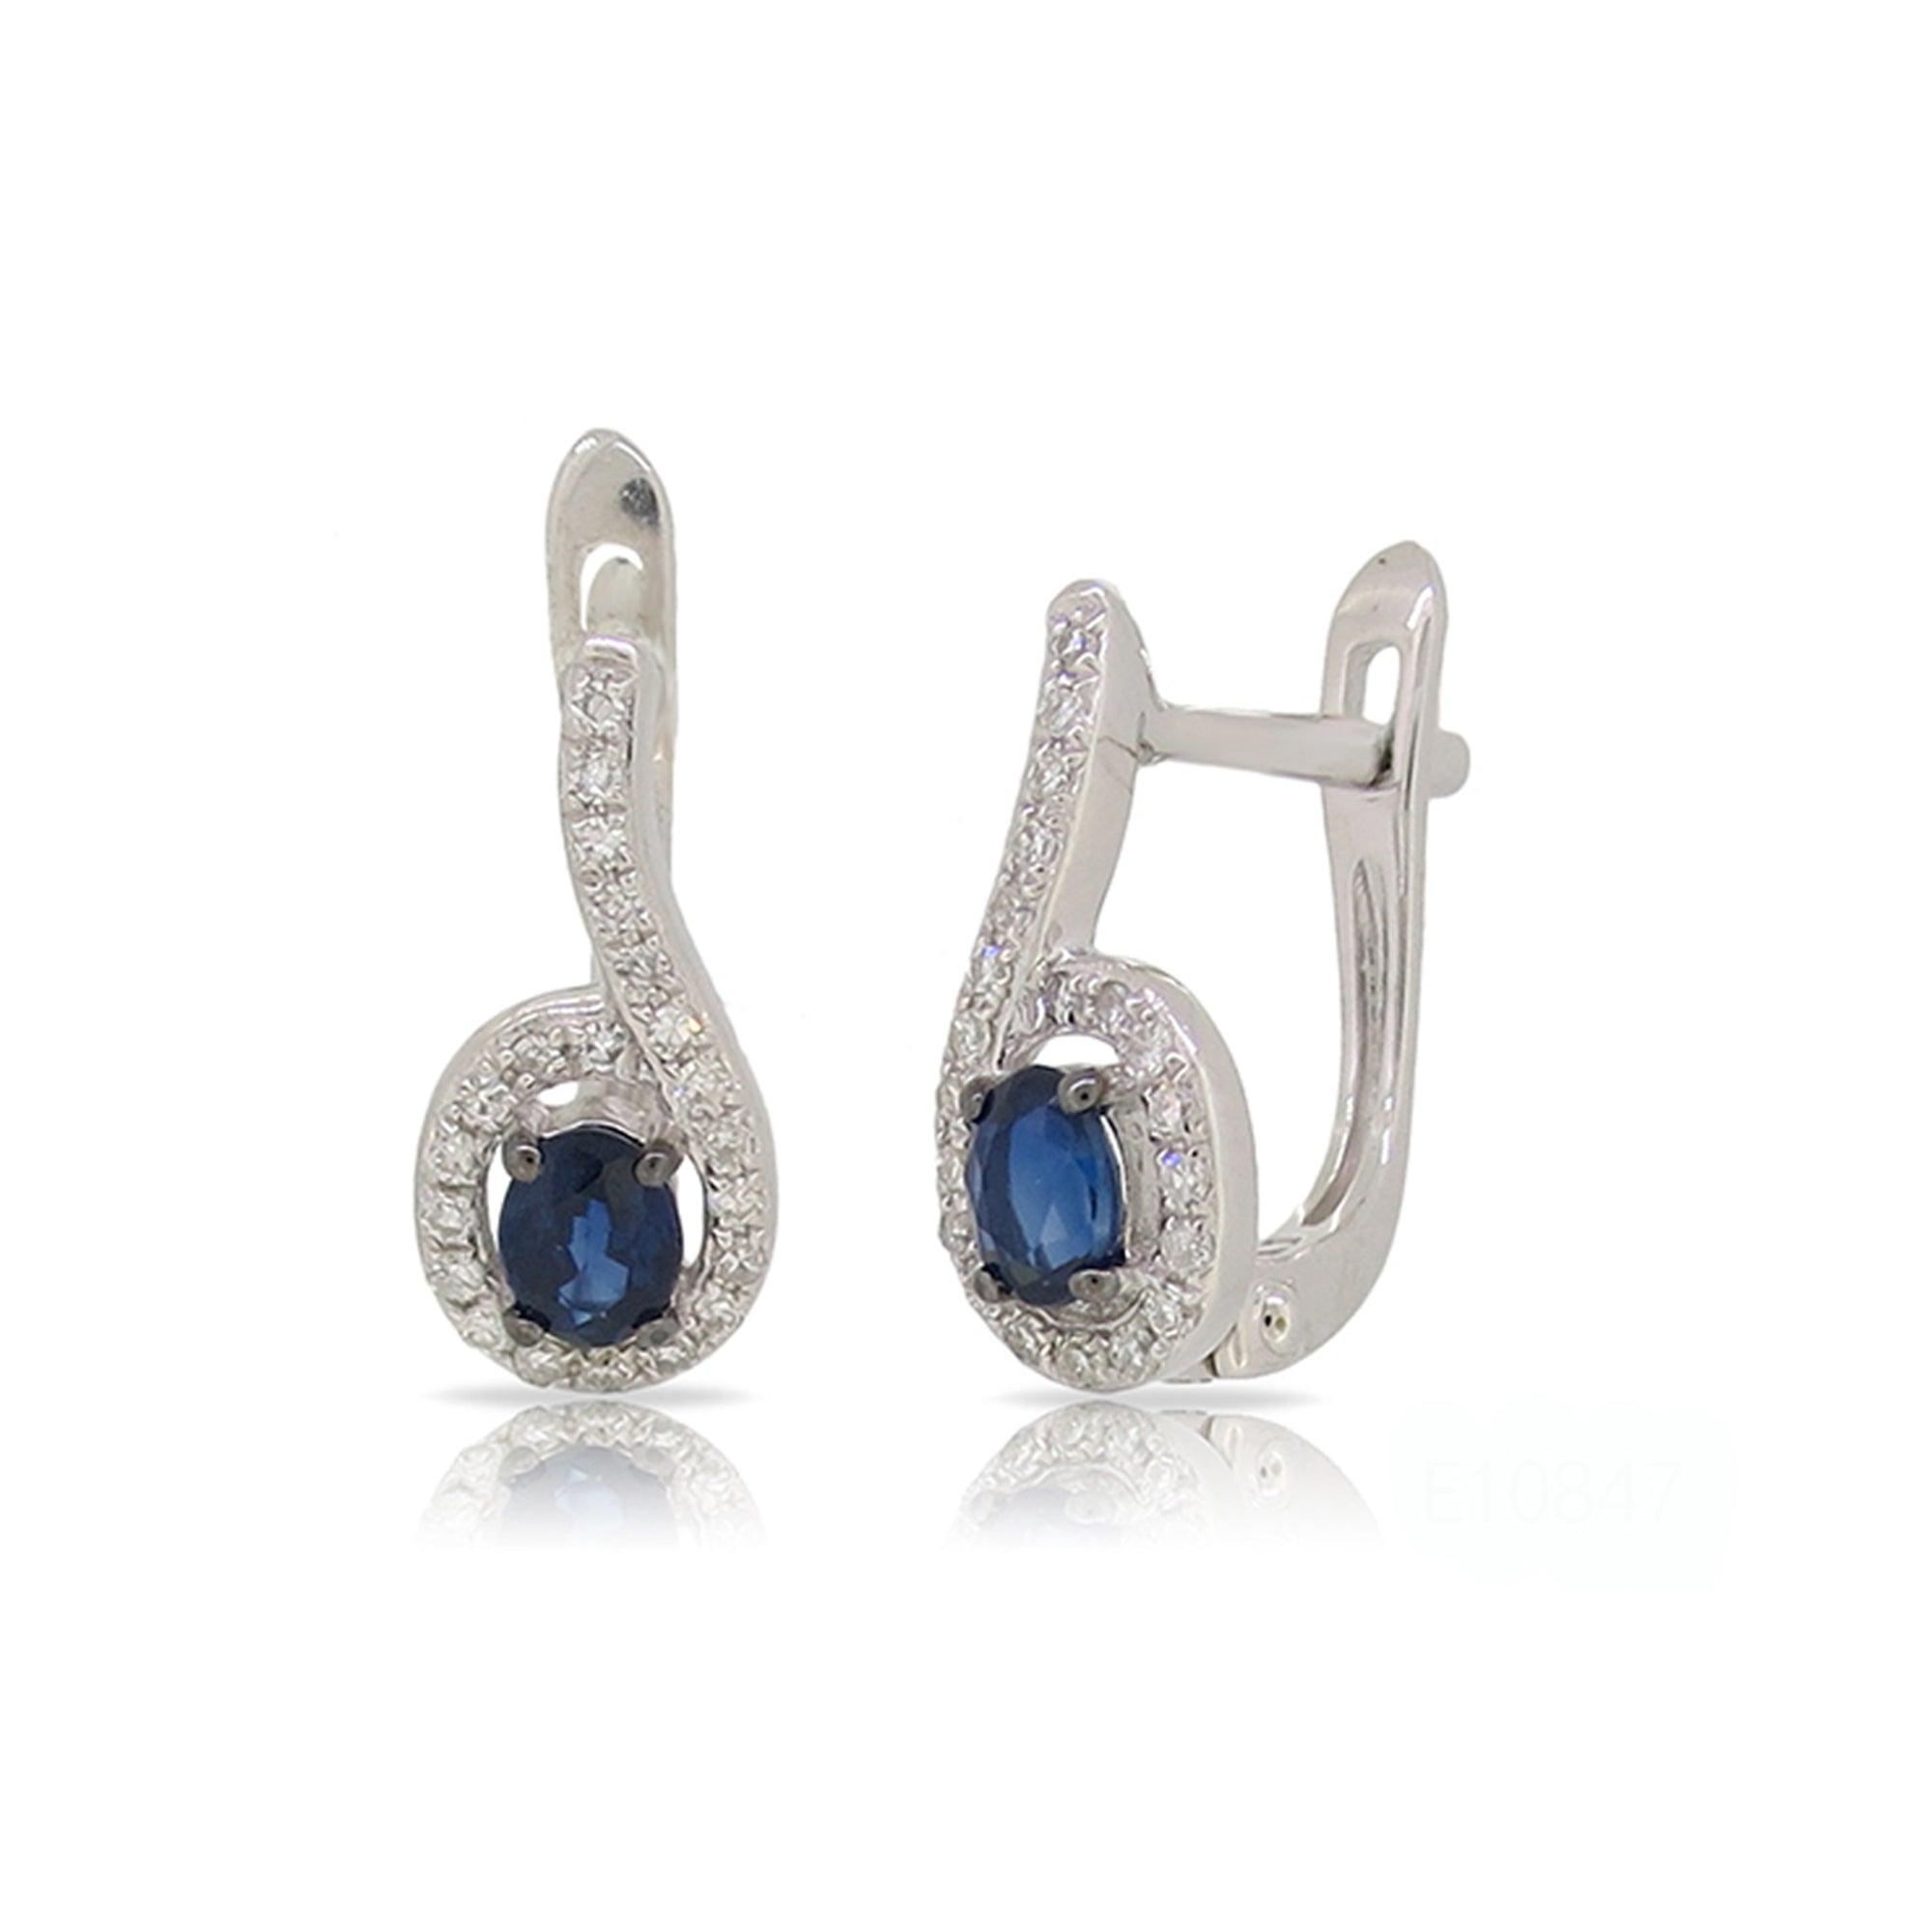 6.11 carat Cushion Cut Ceylon Sapphire and Diamond Earrings – Ronald Abram